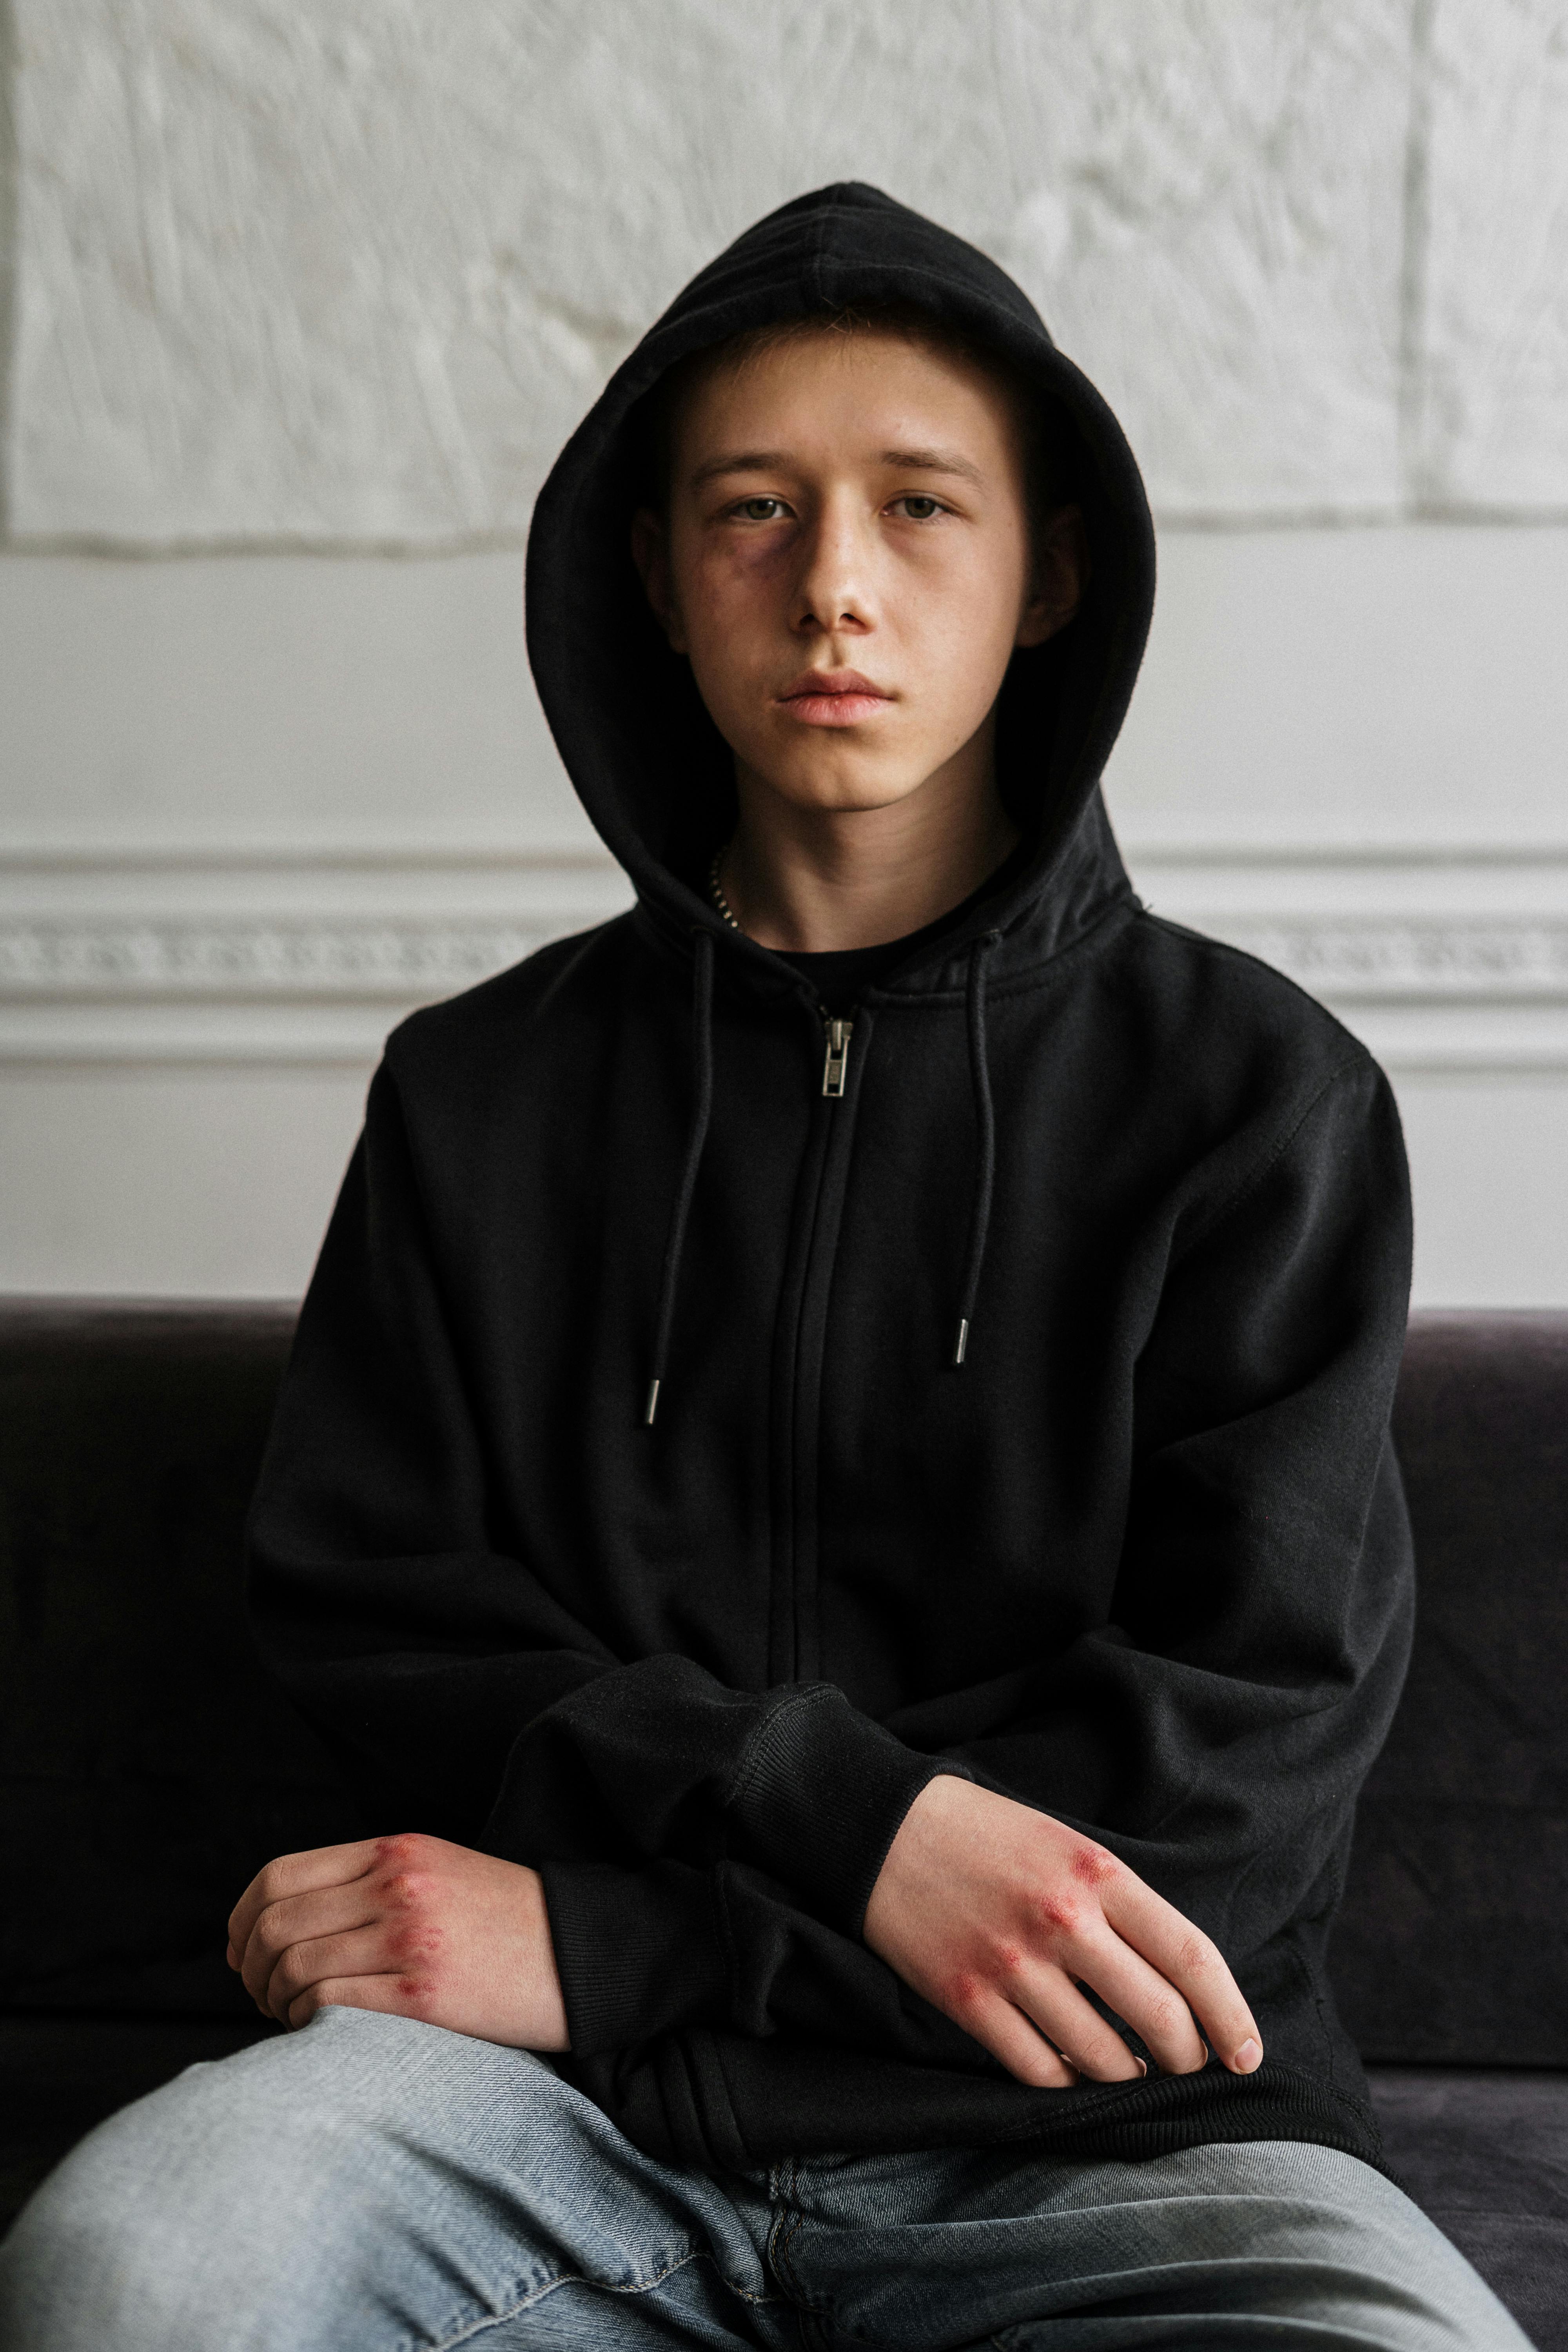 A serious-looking teen | Source: Pexels